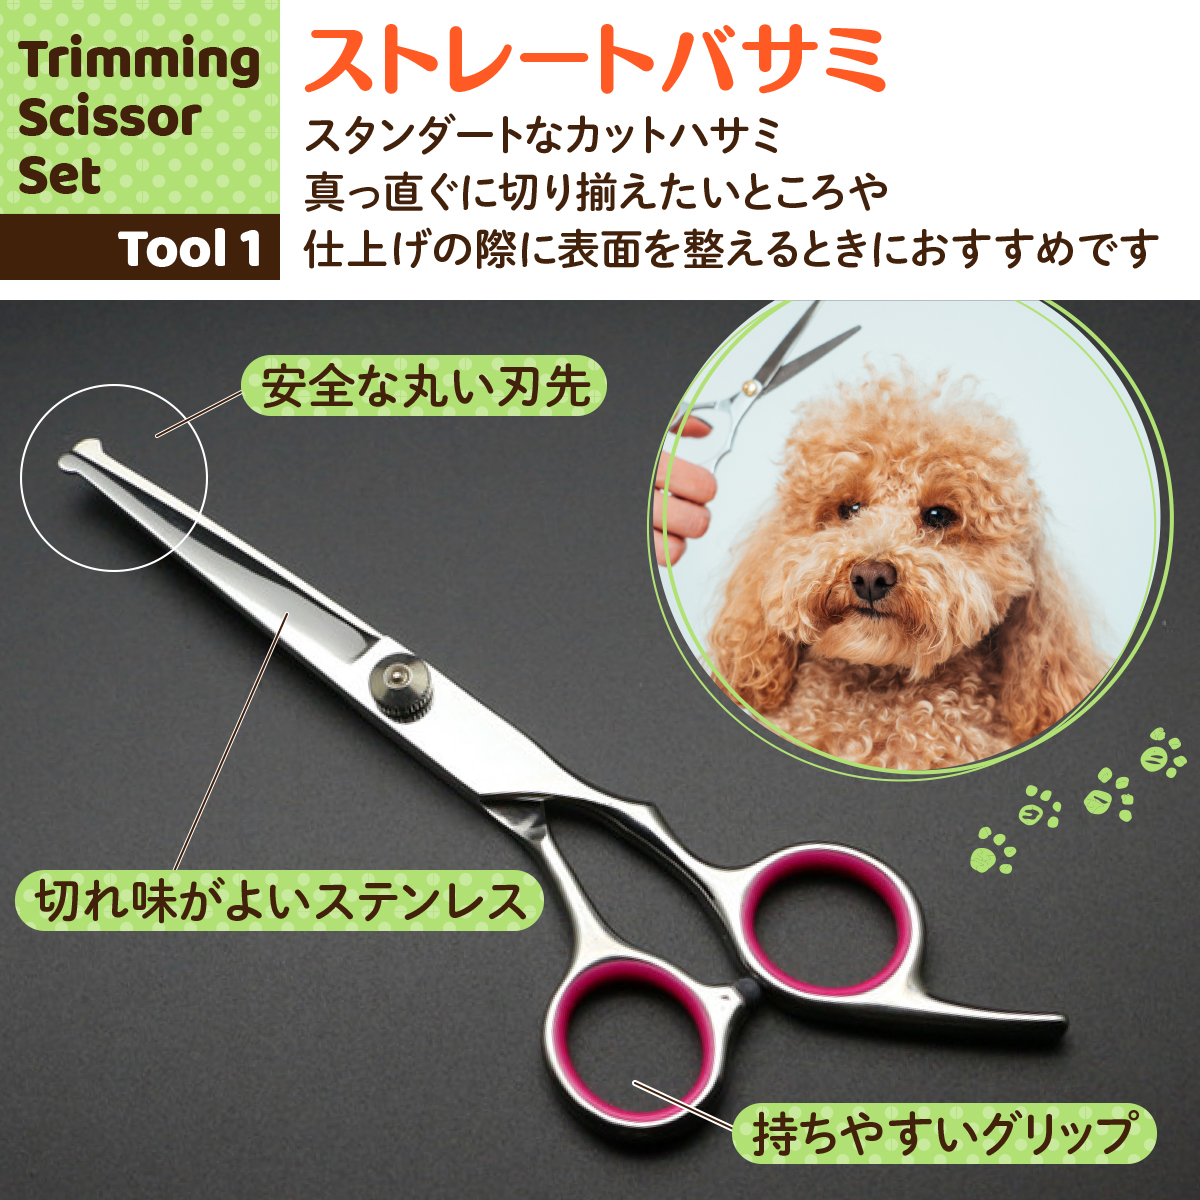  обрезка si The - зажим собака обрезка собака для зажим профессиональный комплект машина b cut basami домашнее животное зажим 